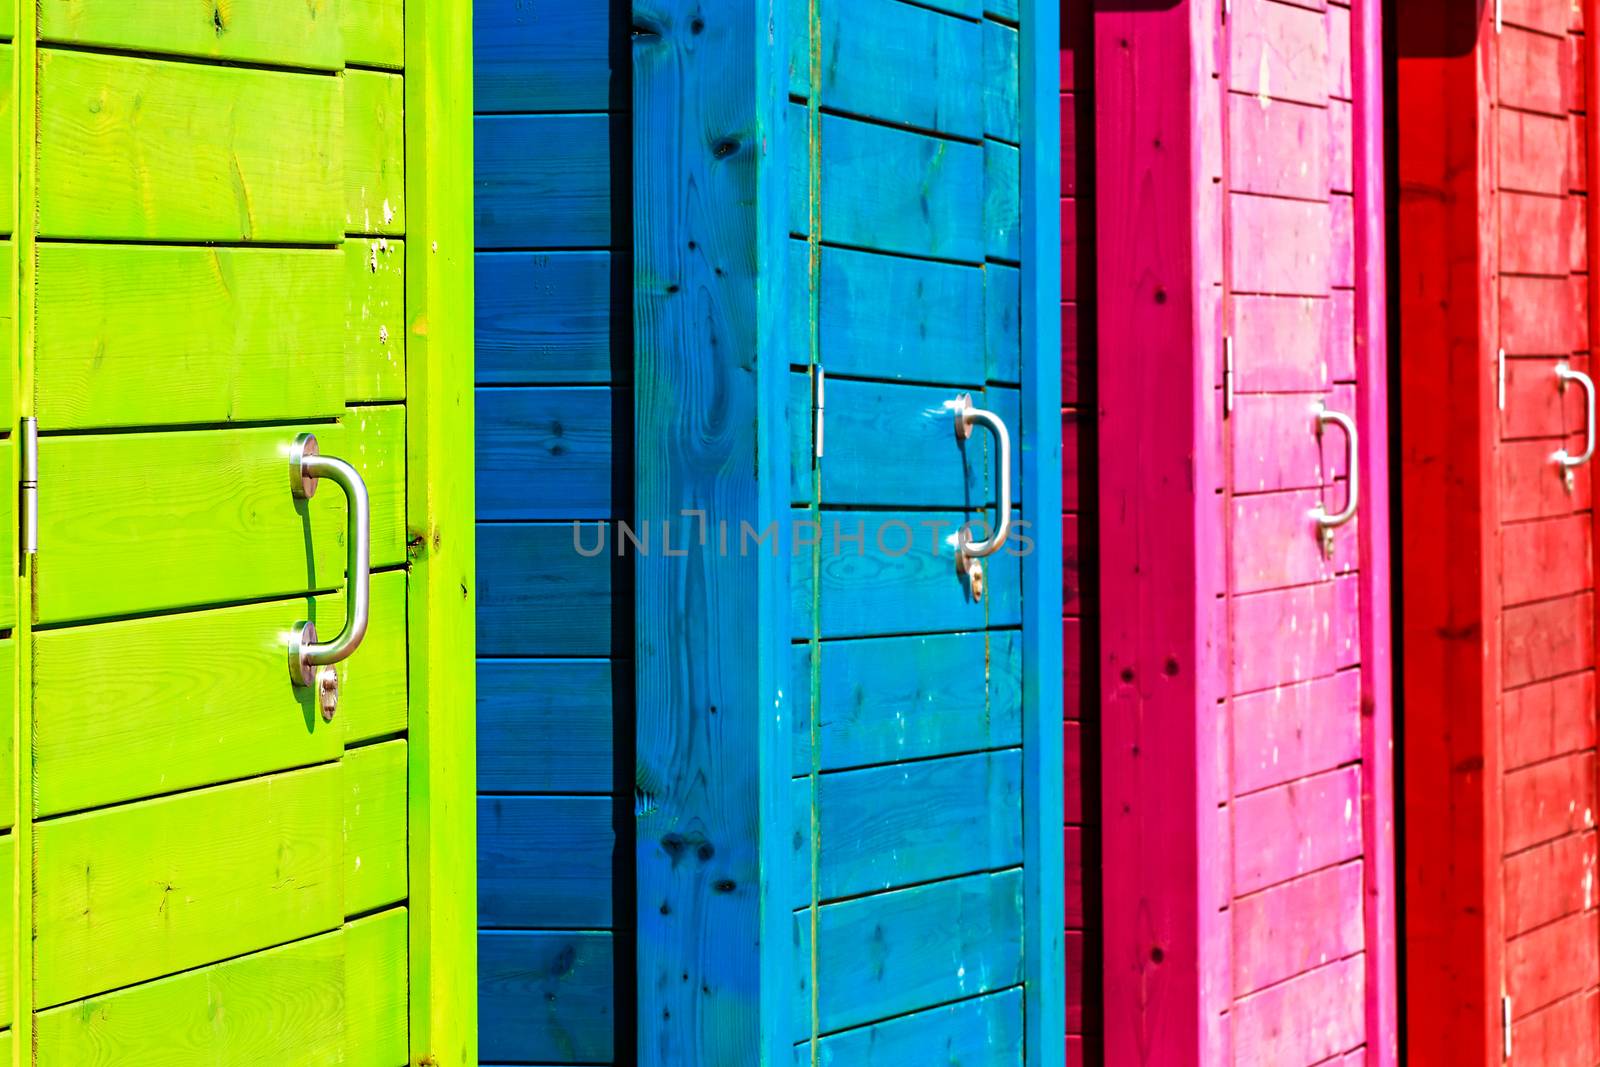 Beautiful colorful beach cabins closeup. Horizontal image.